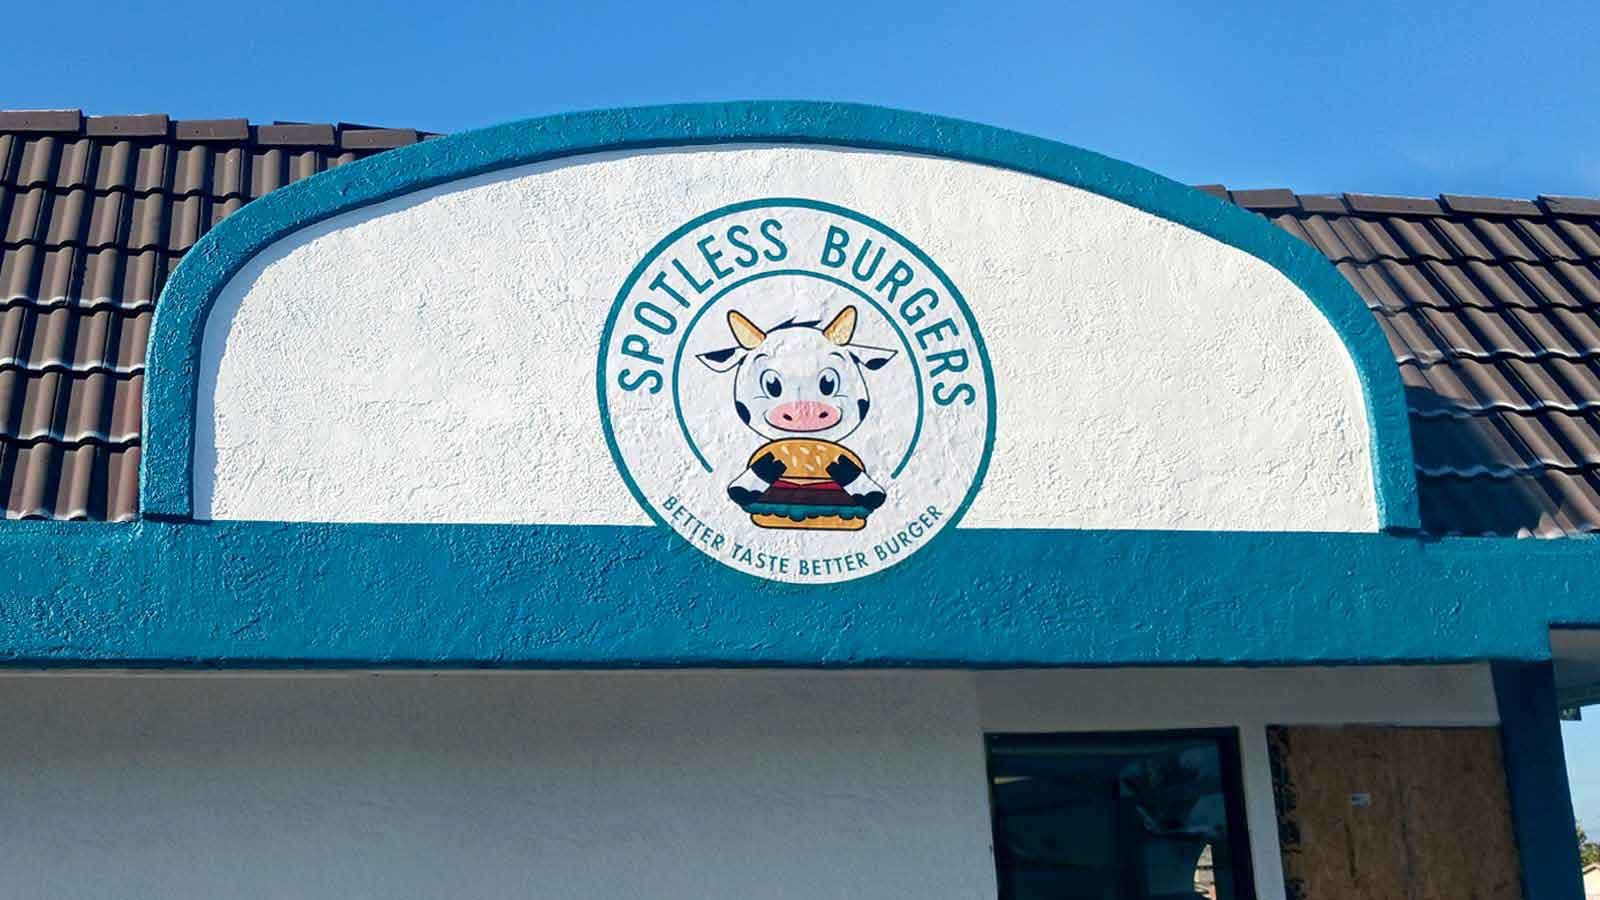 Spotless Burgers custom sign painting